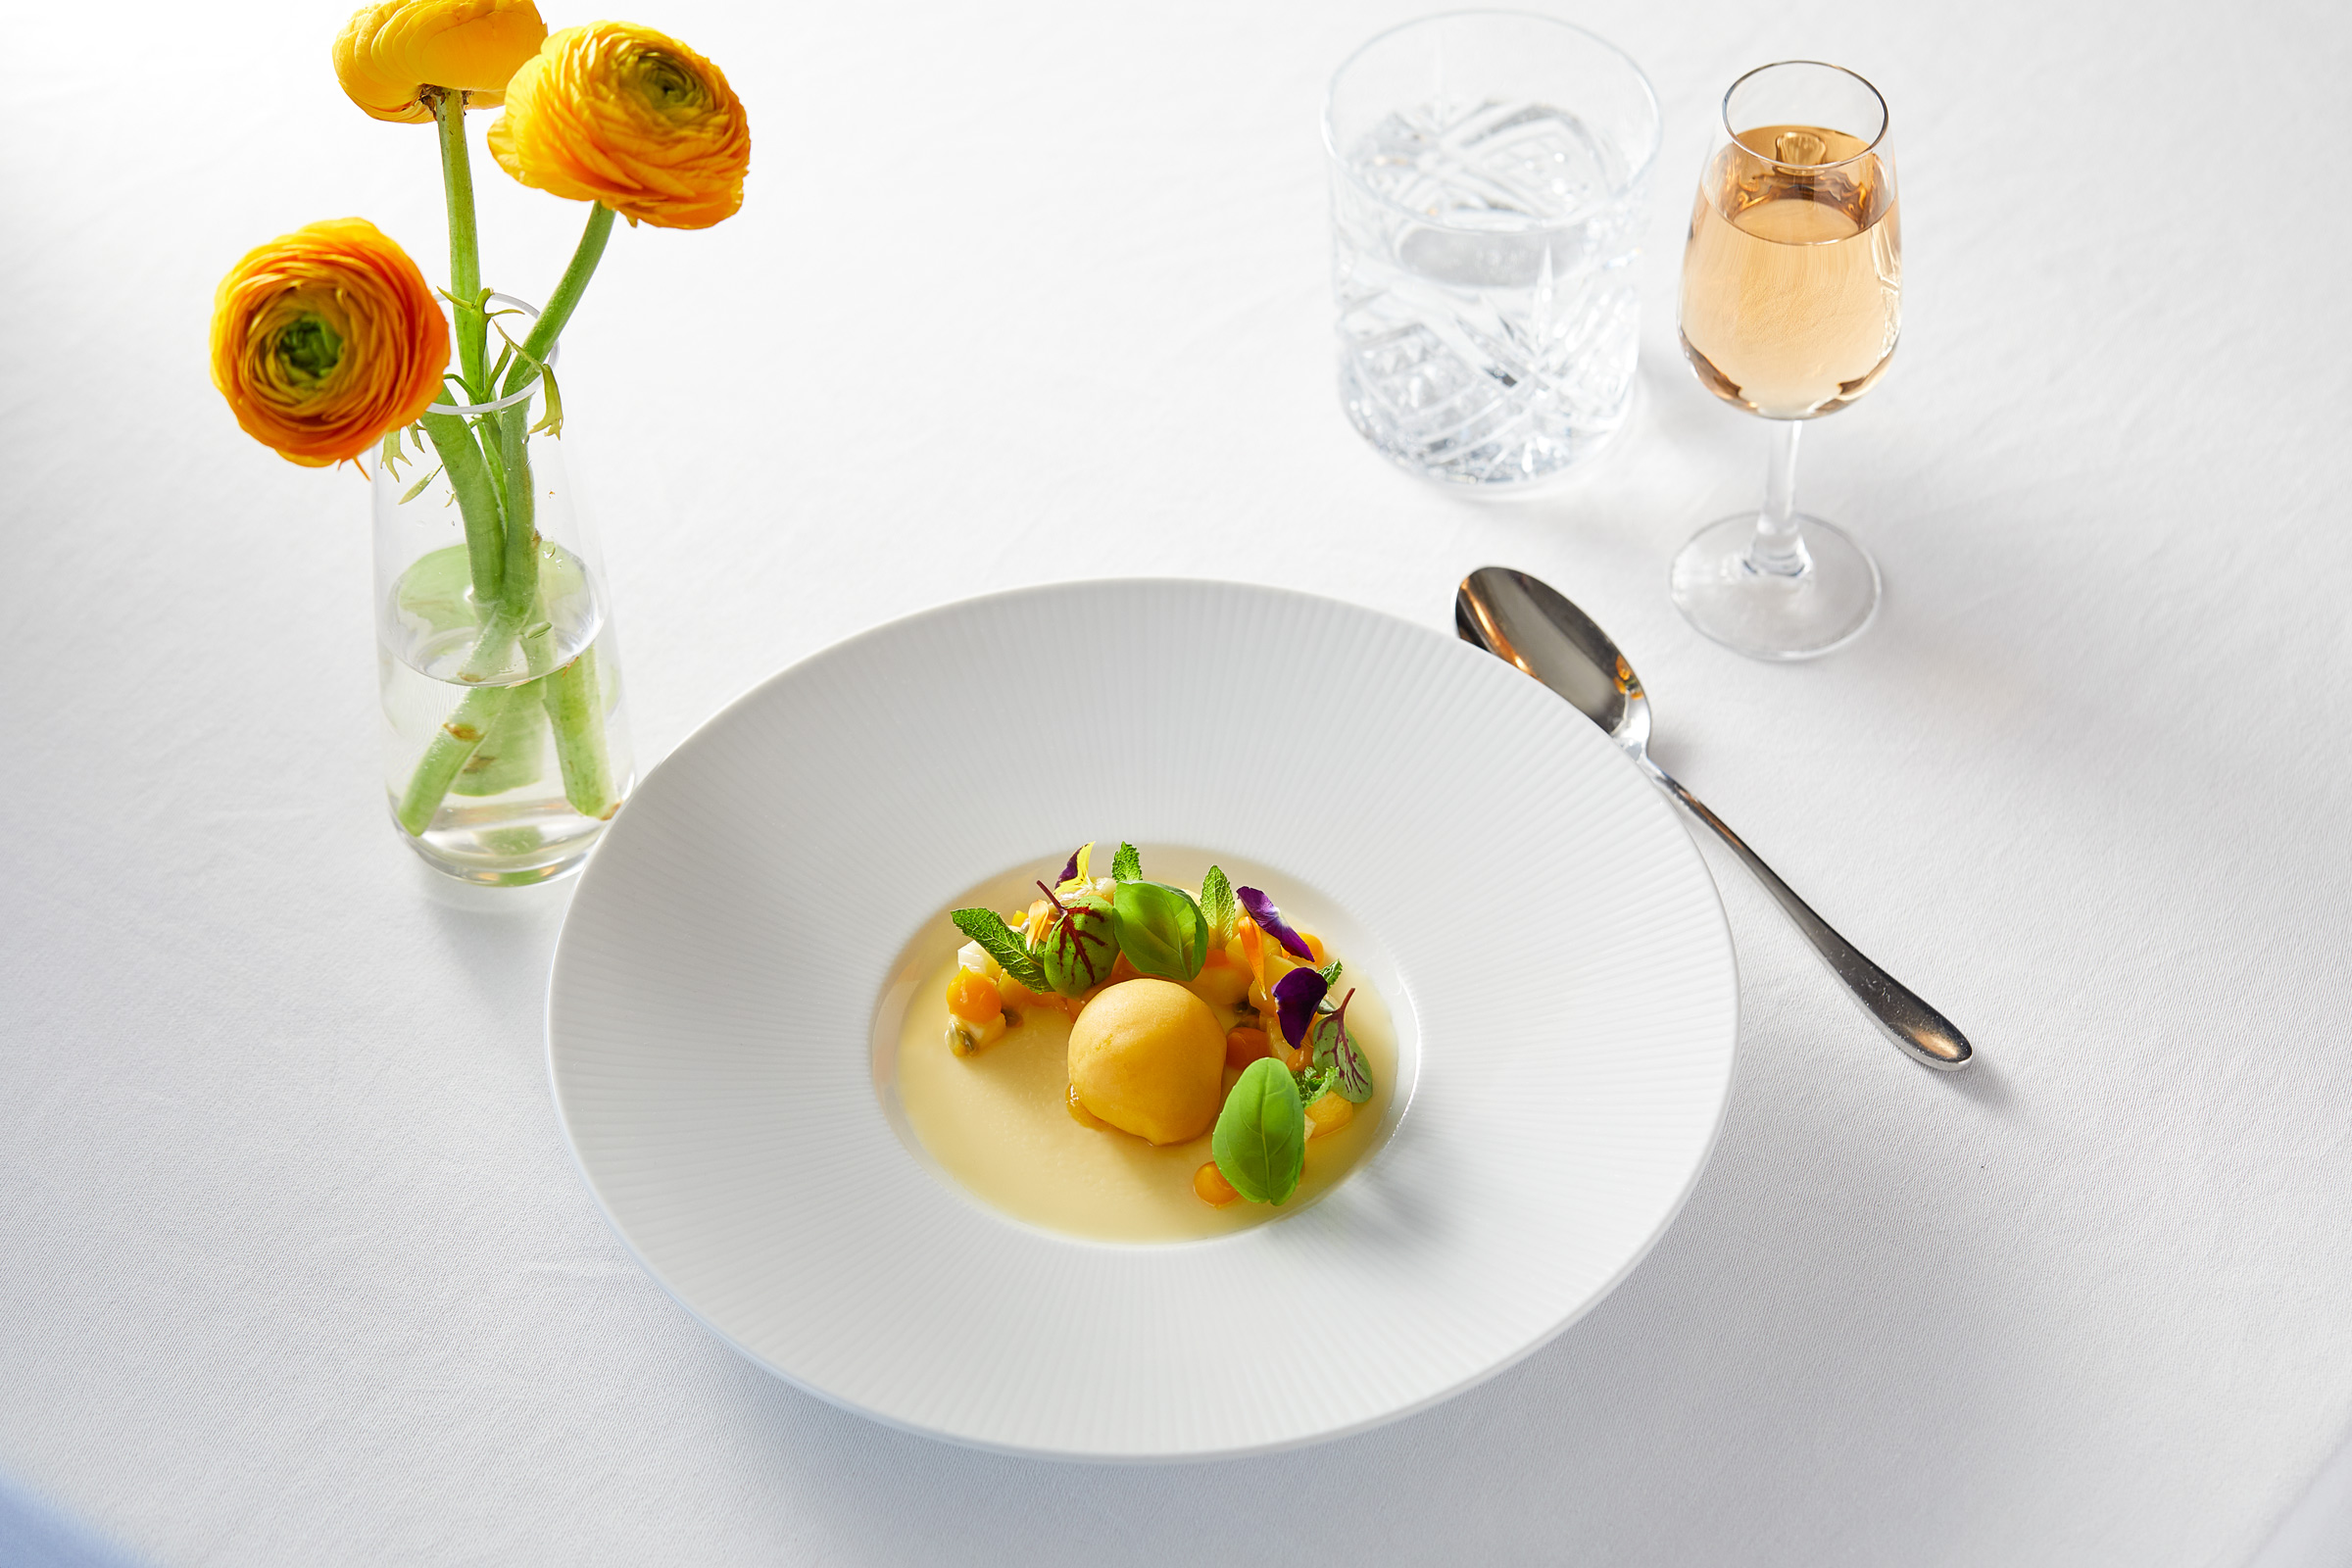 Lemon Posset with Mango Sorbet, Scottish food and drink photographer - Alastair Ferrier